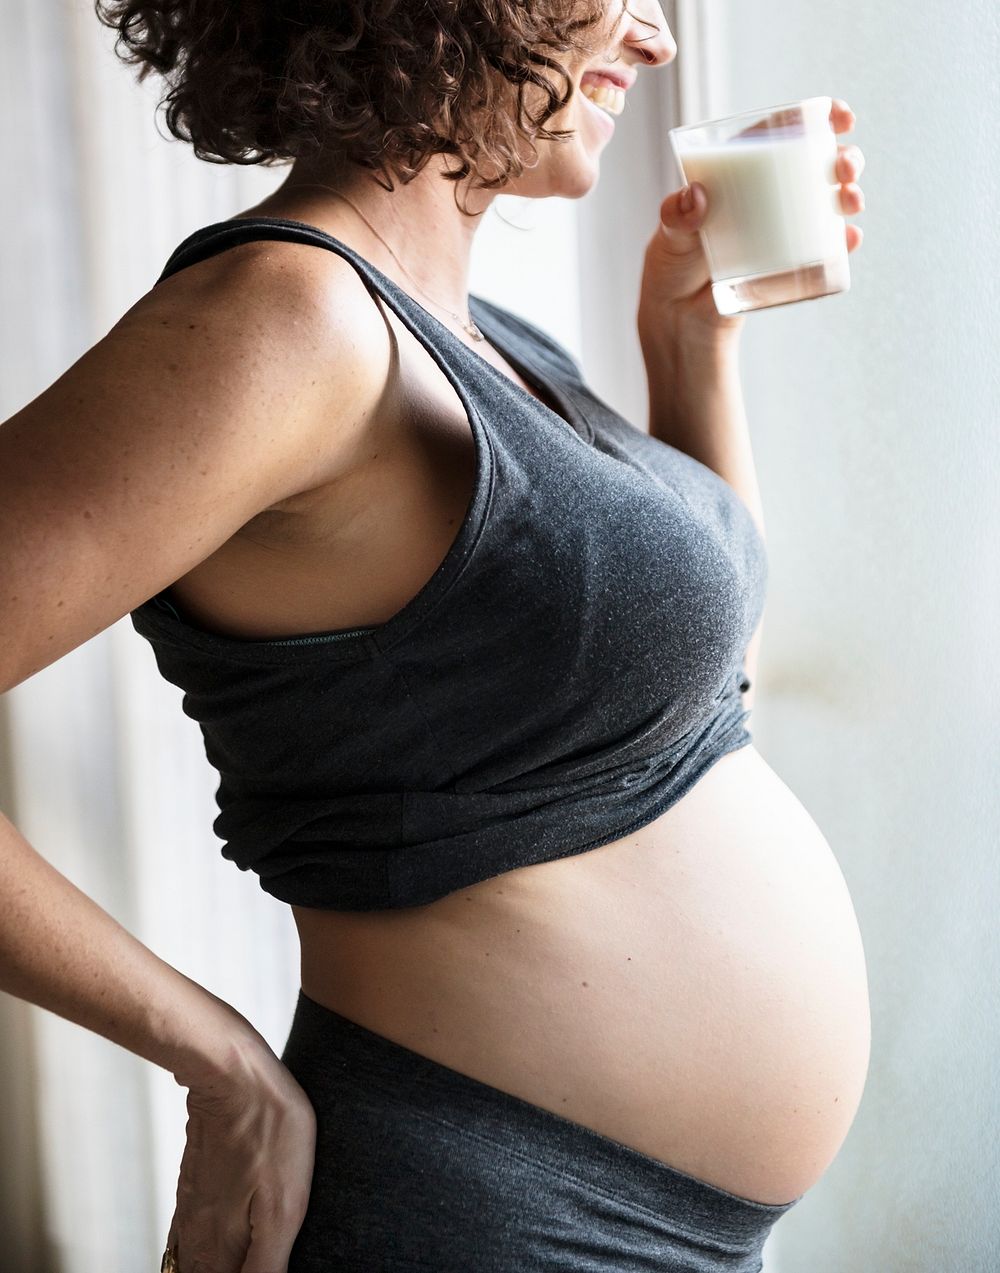 Woman drinking milk during her pregnancy